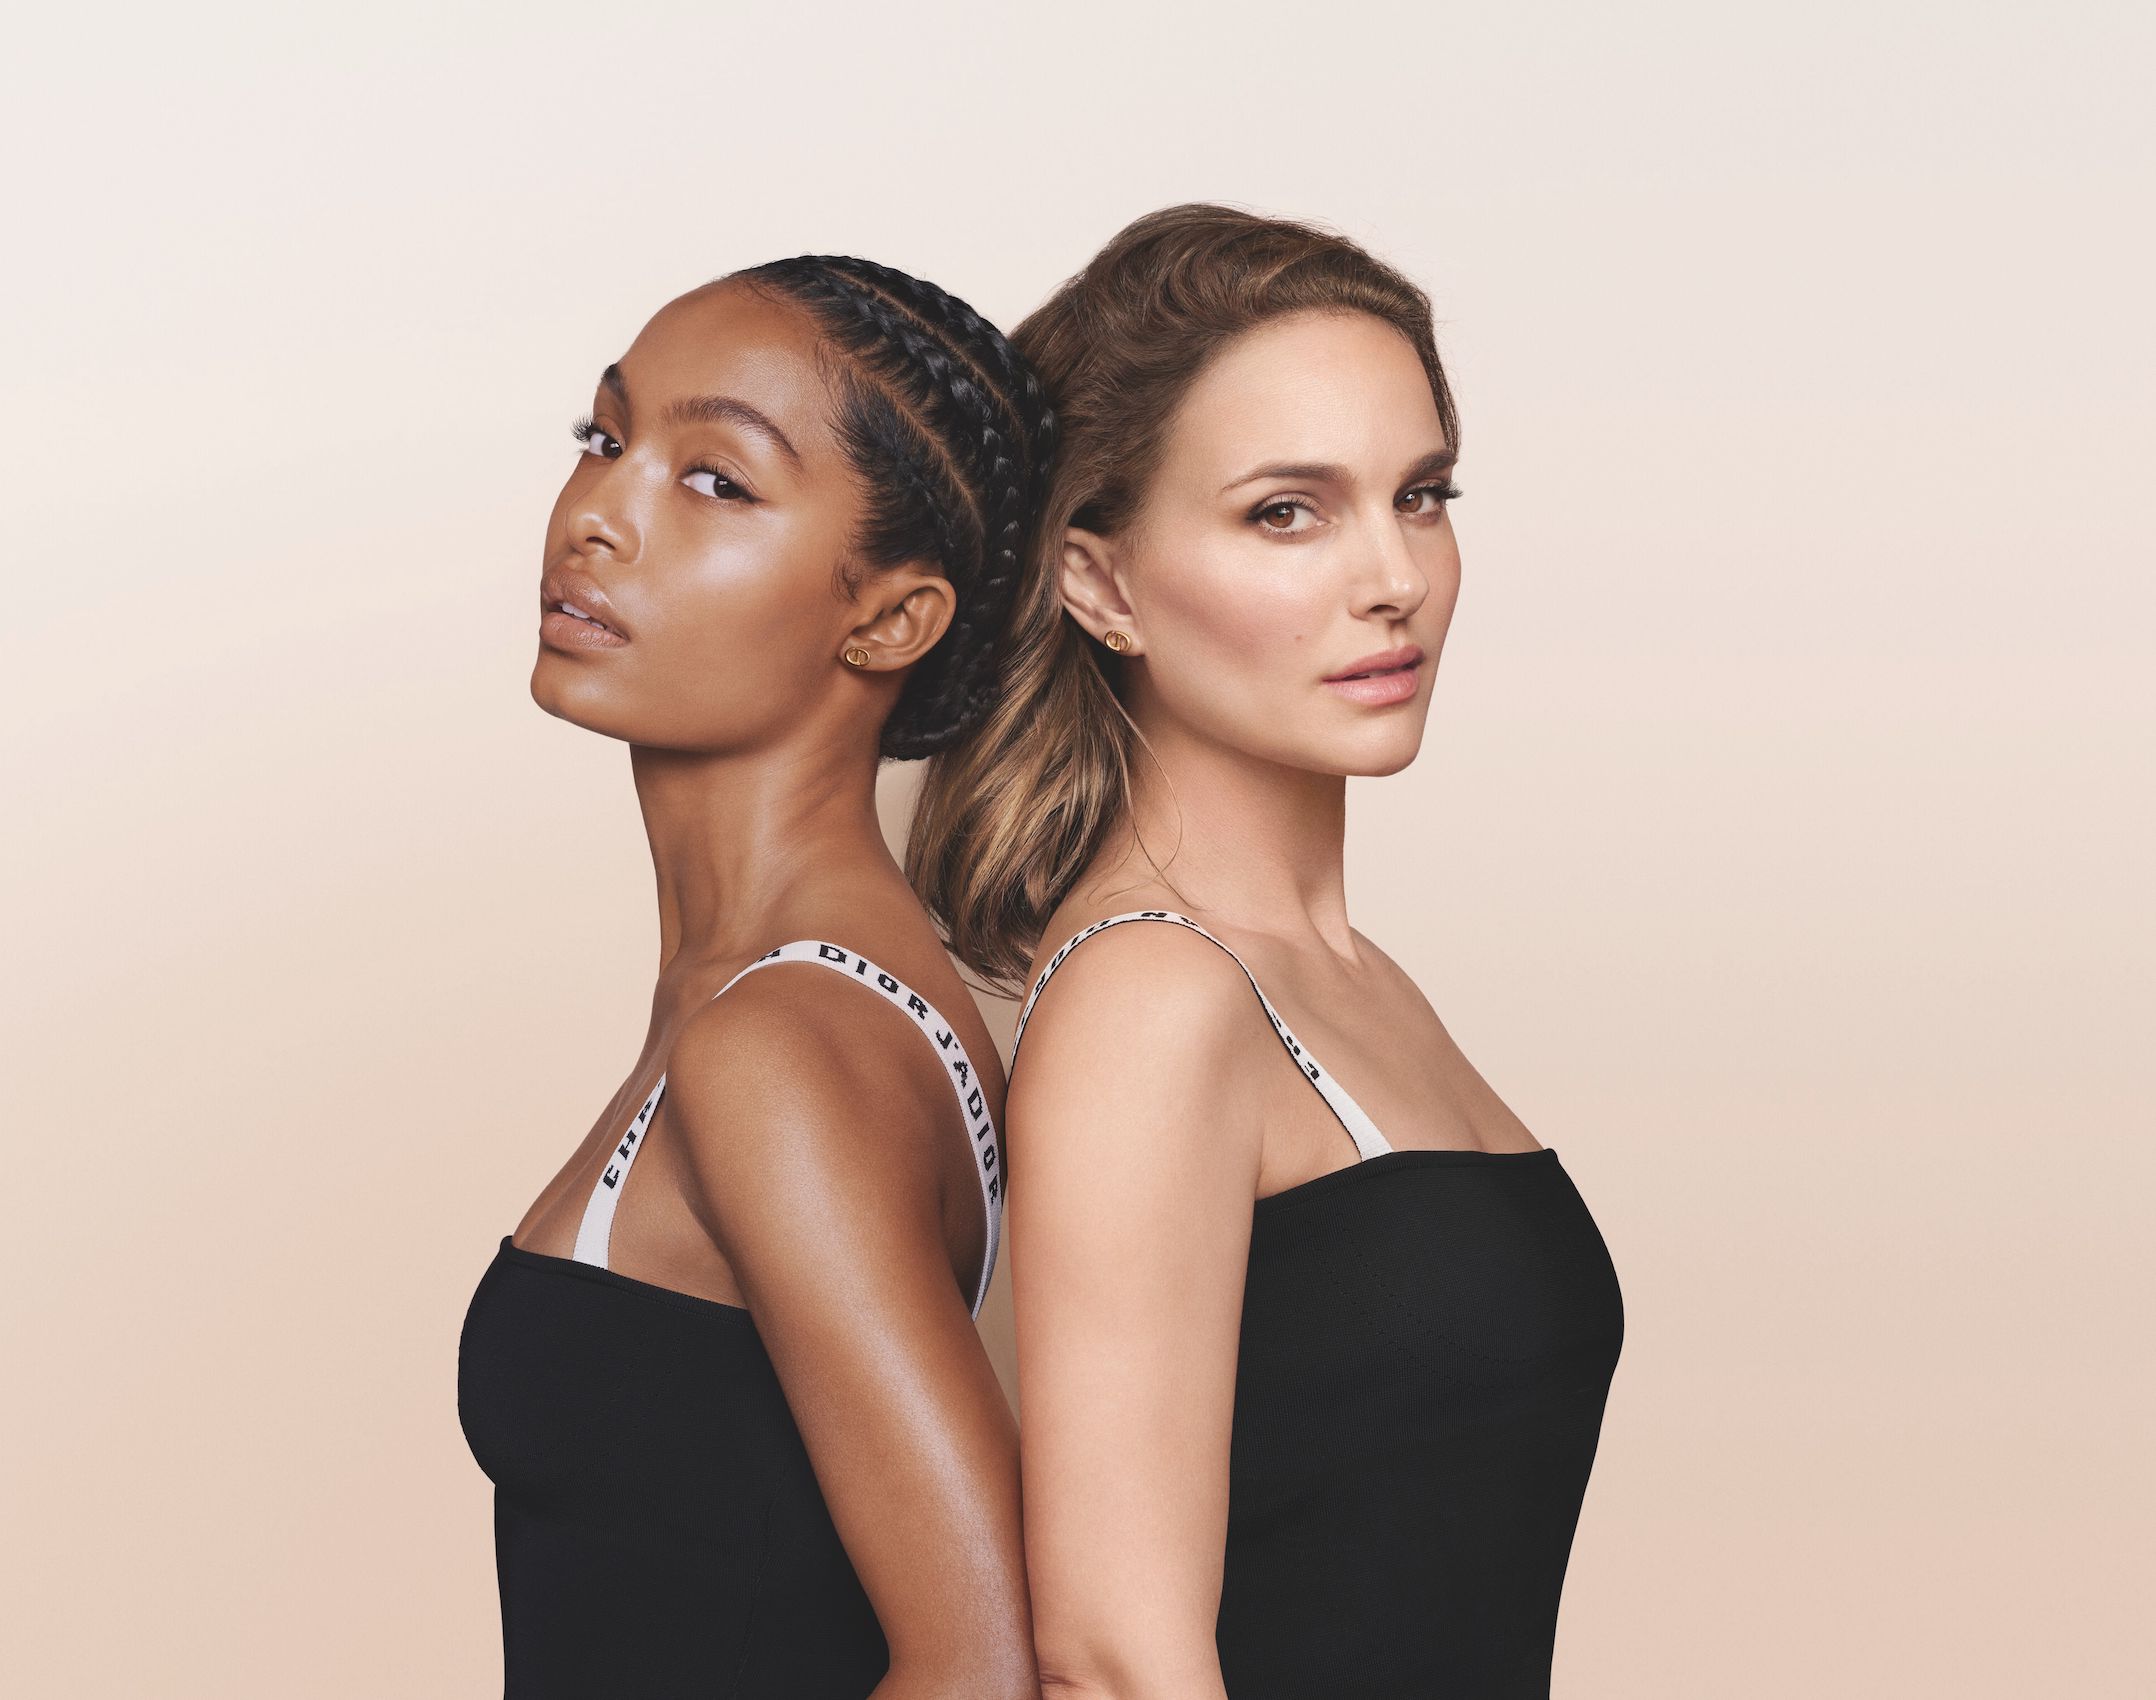  Dior Ambassadors Yara Shahidi and Natalie Portman for Dior Forever.